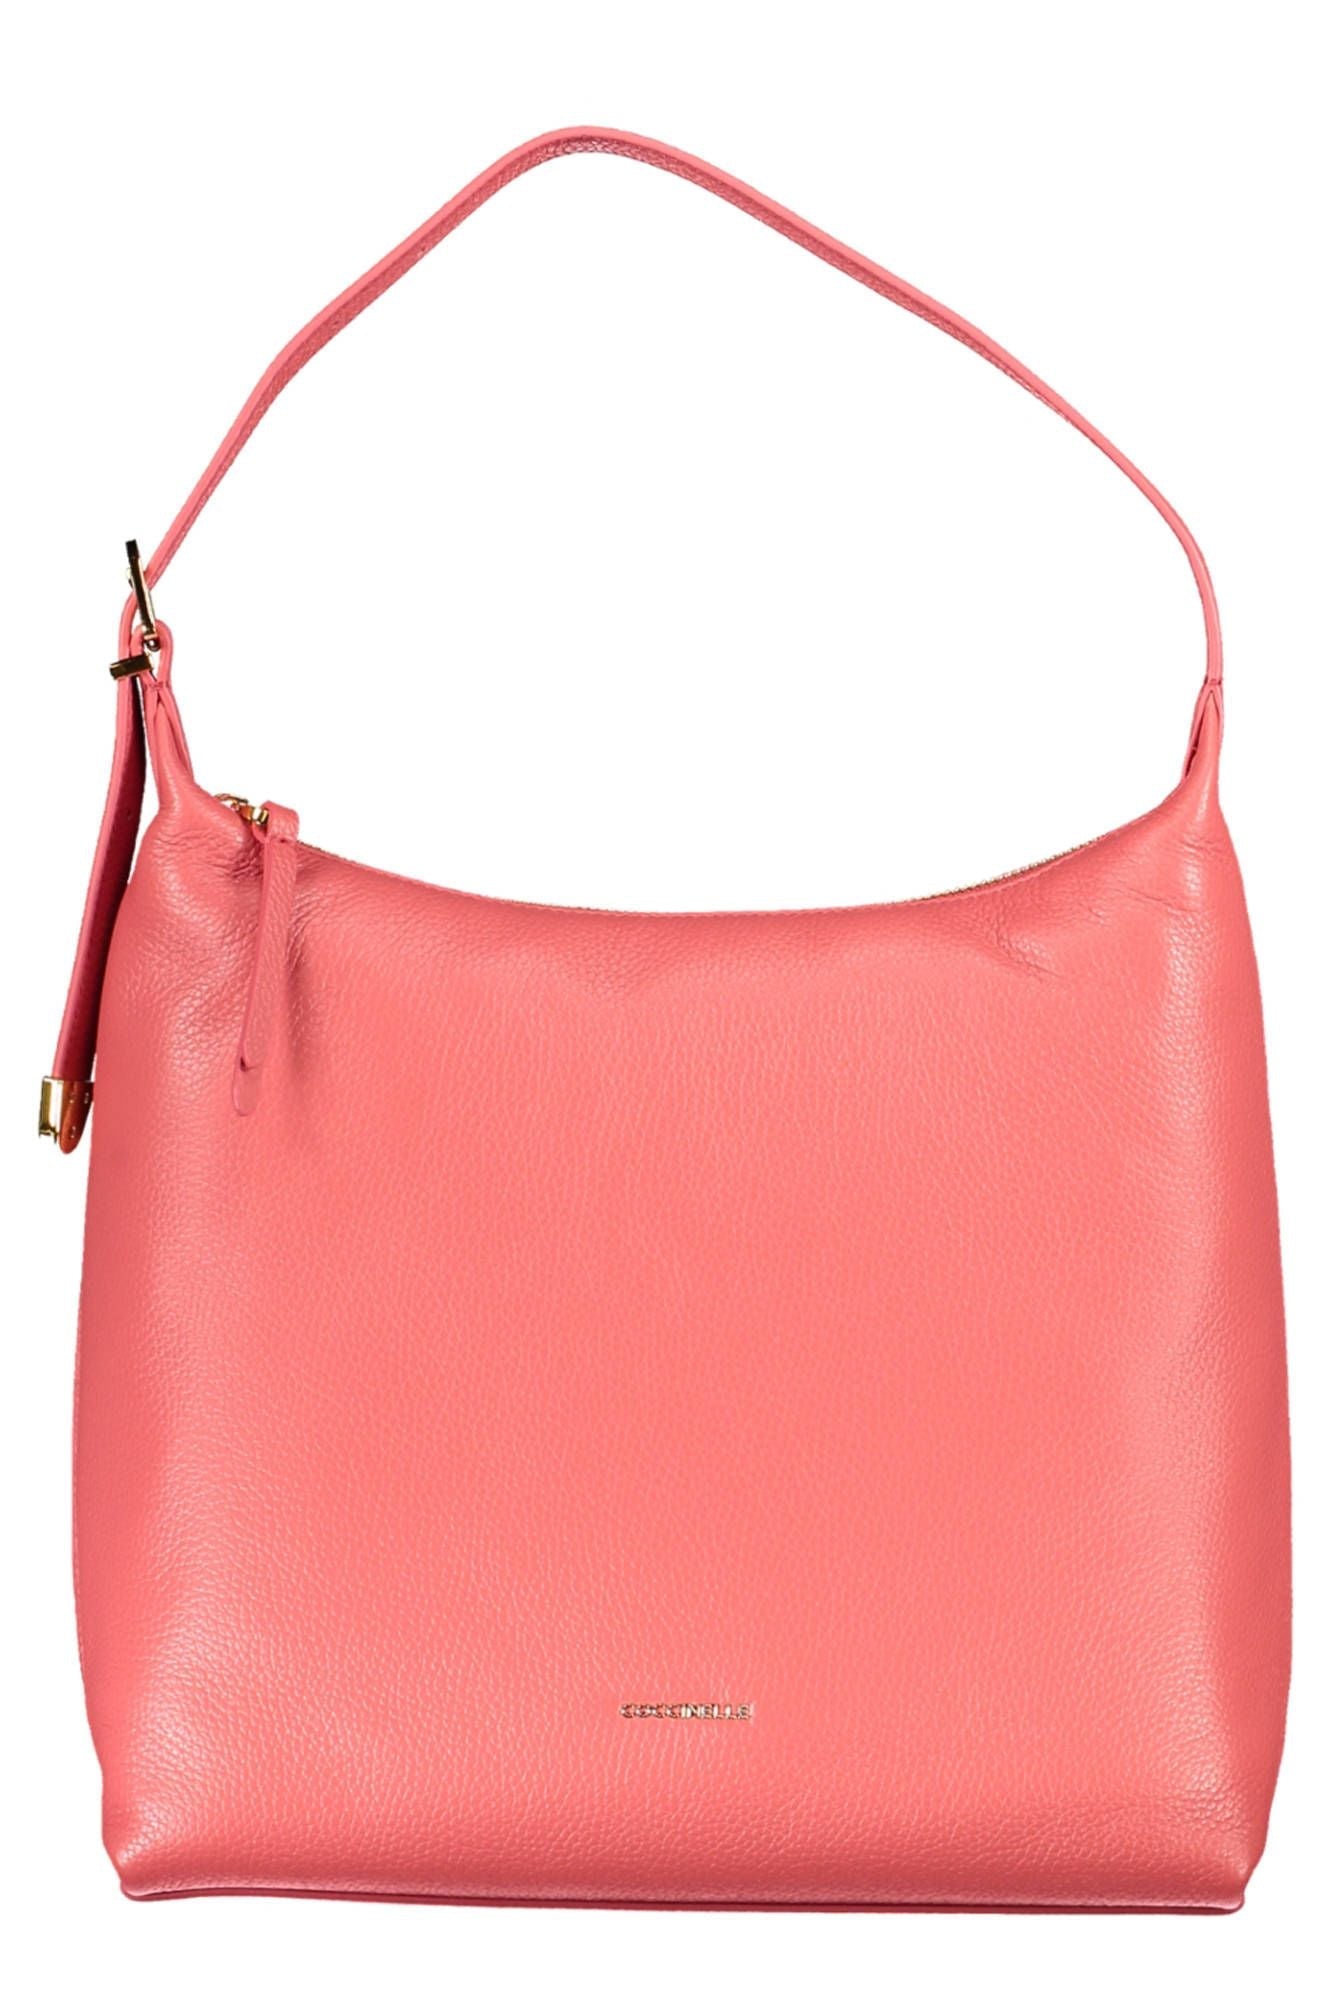 Coccinelle Pink Leather Handbag - Walbiz.com